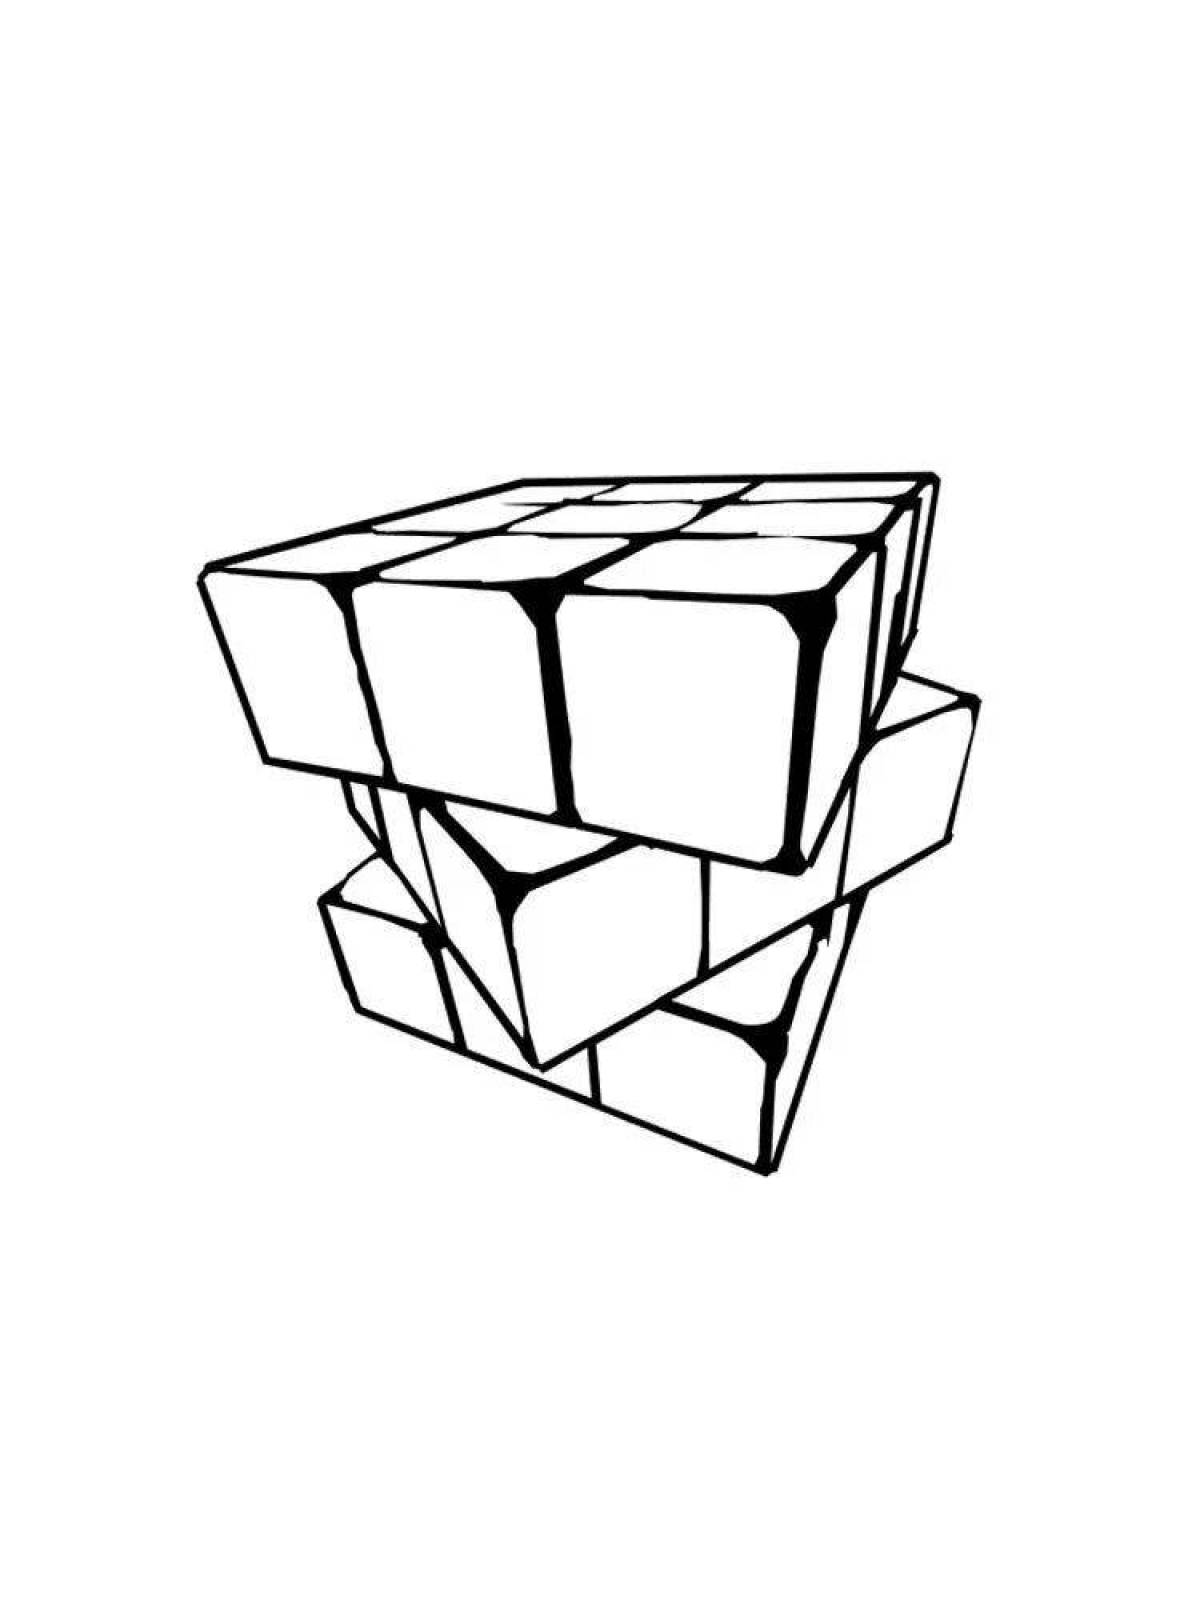 Color-hypnotic rubik's cube coloring page